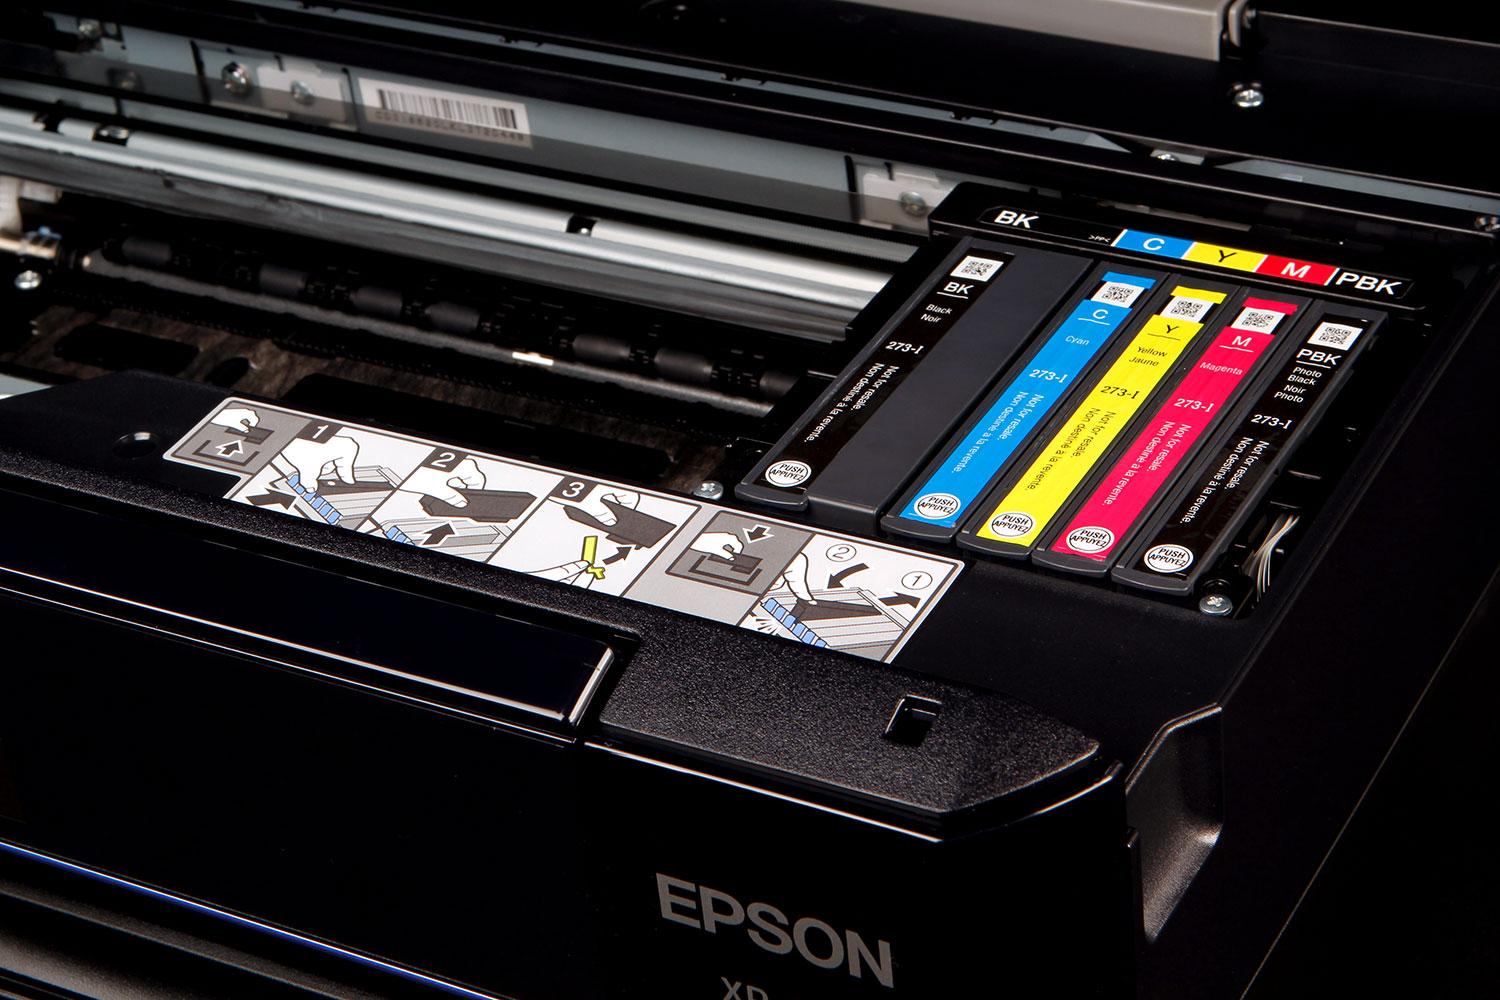 Epson Expression Premium XP-610 Printer: Small printer, big features